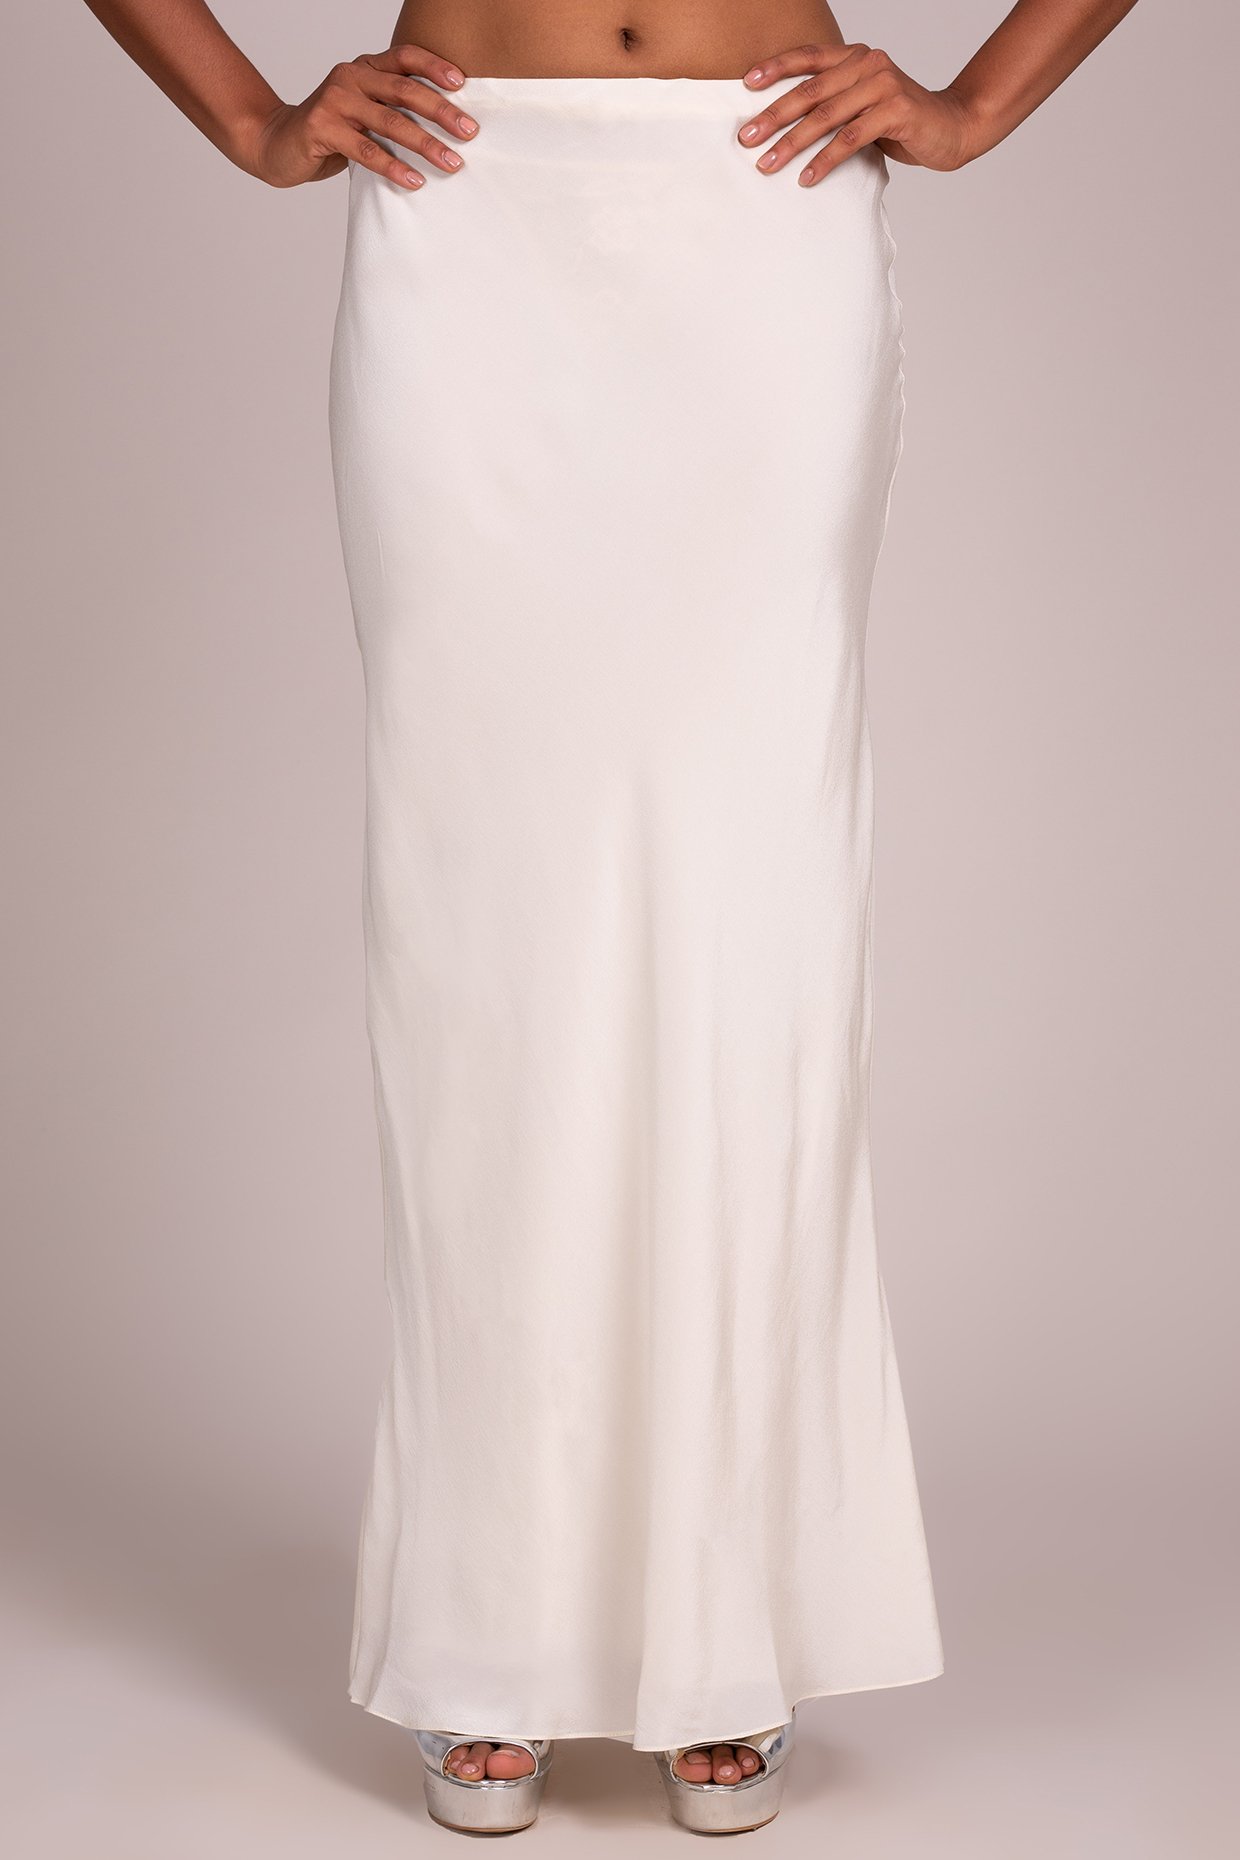 Buy AKOK White Satin Layered Frill Skirt Online  Aza Fashions